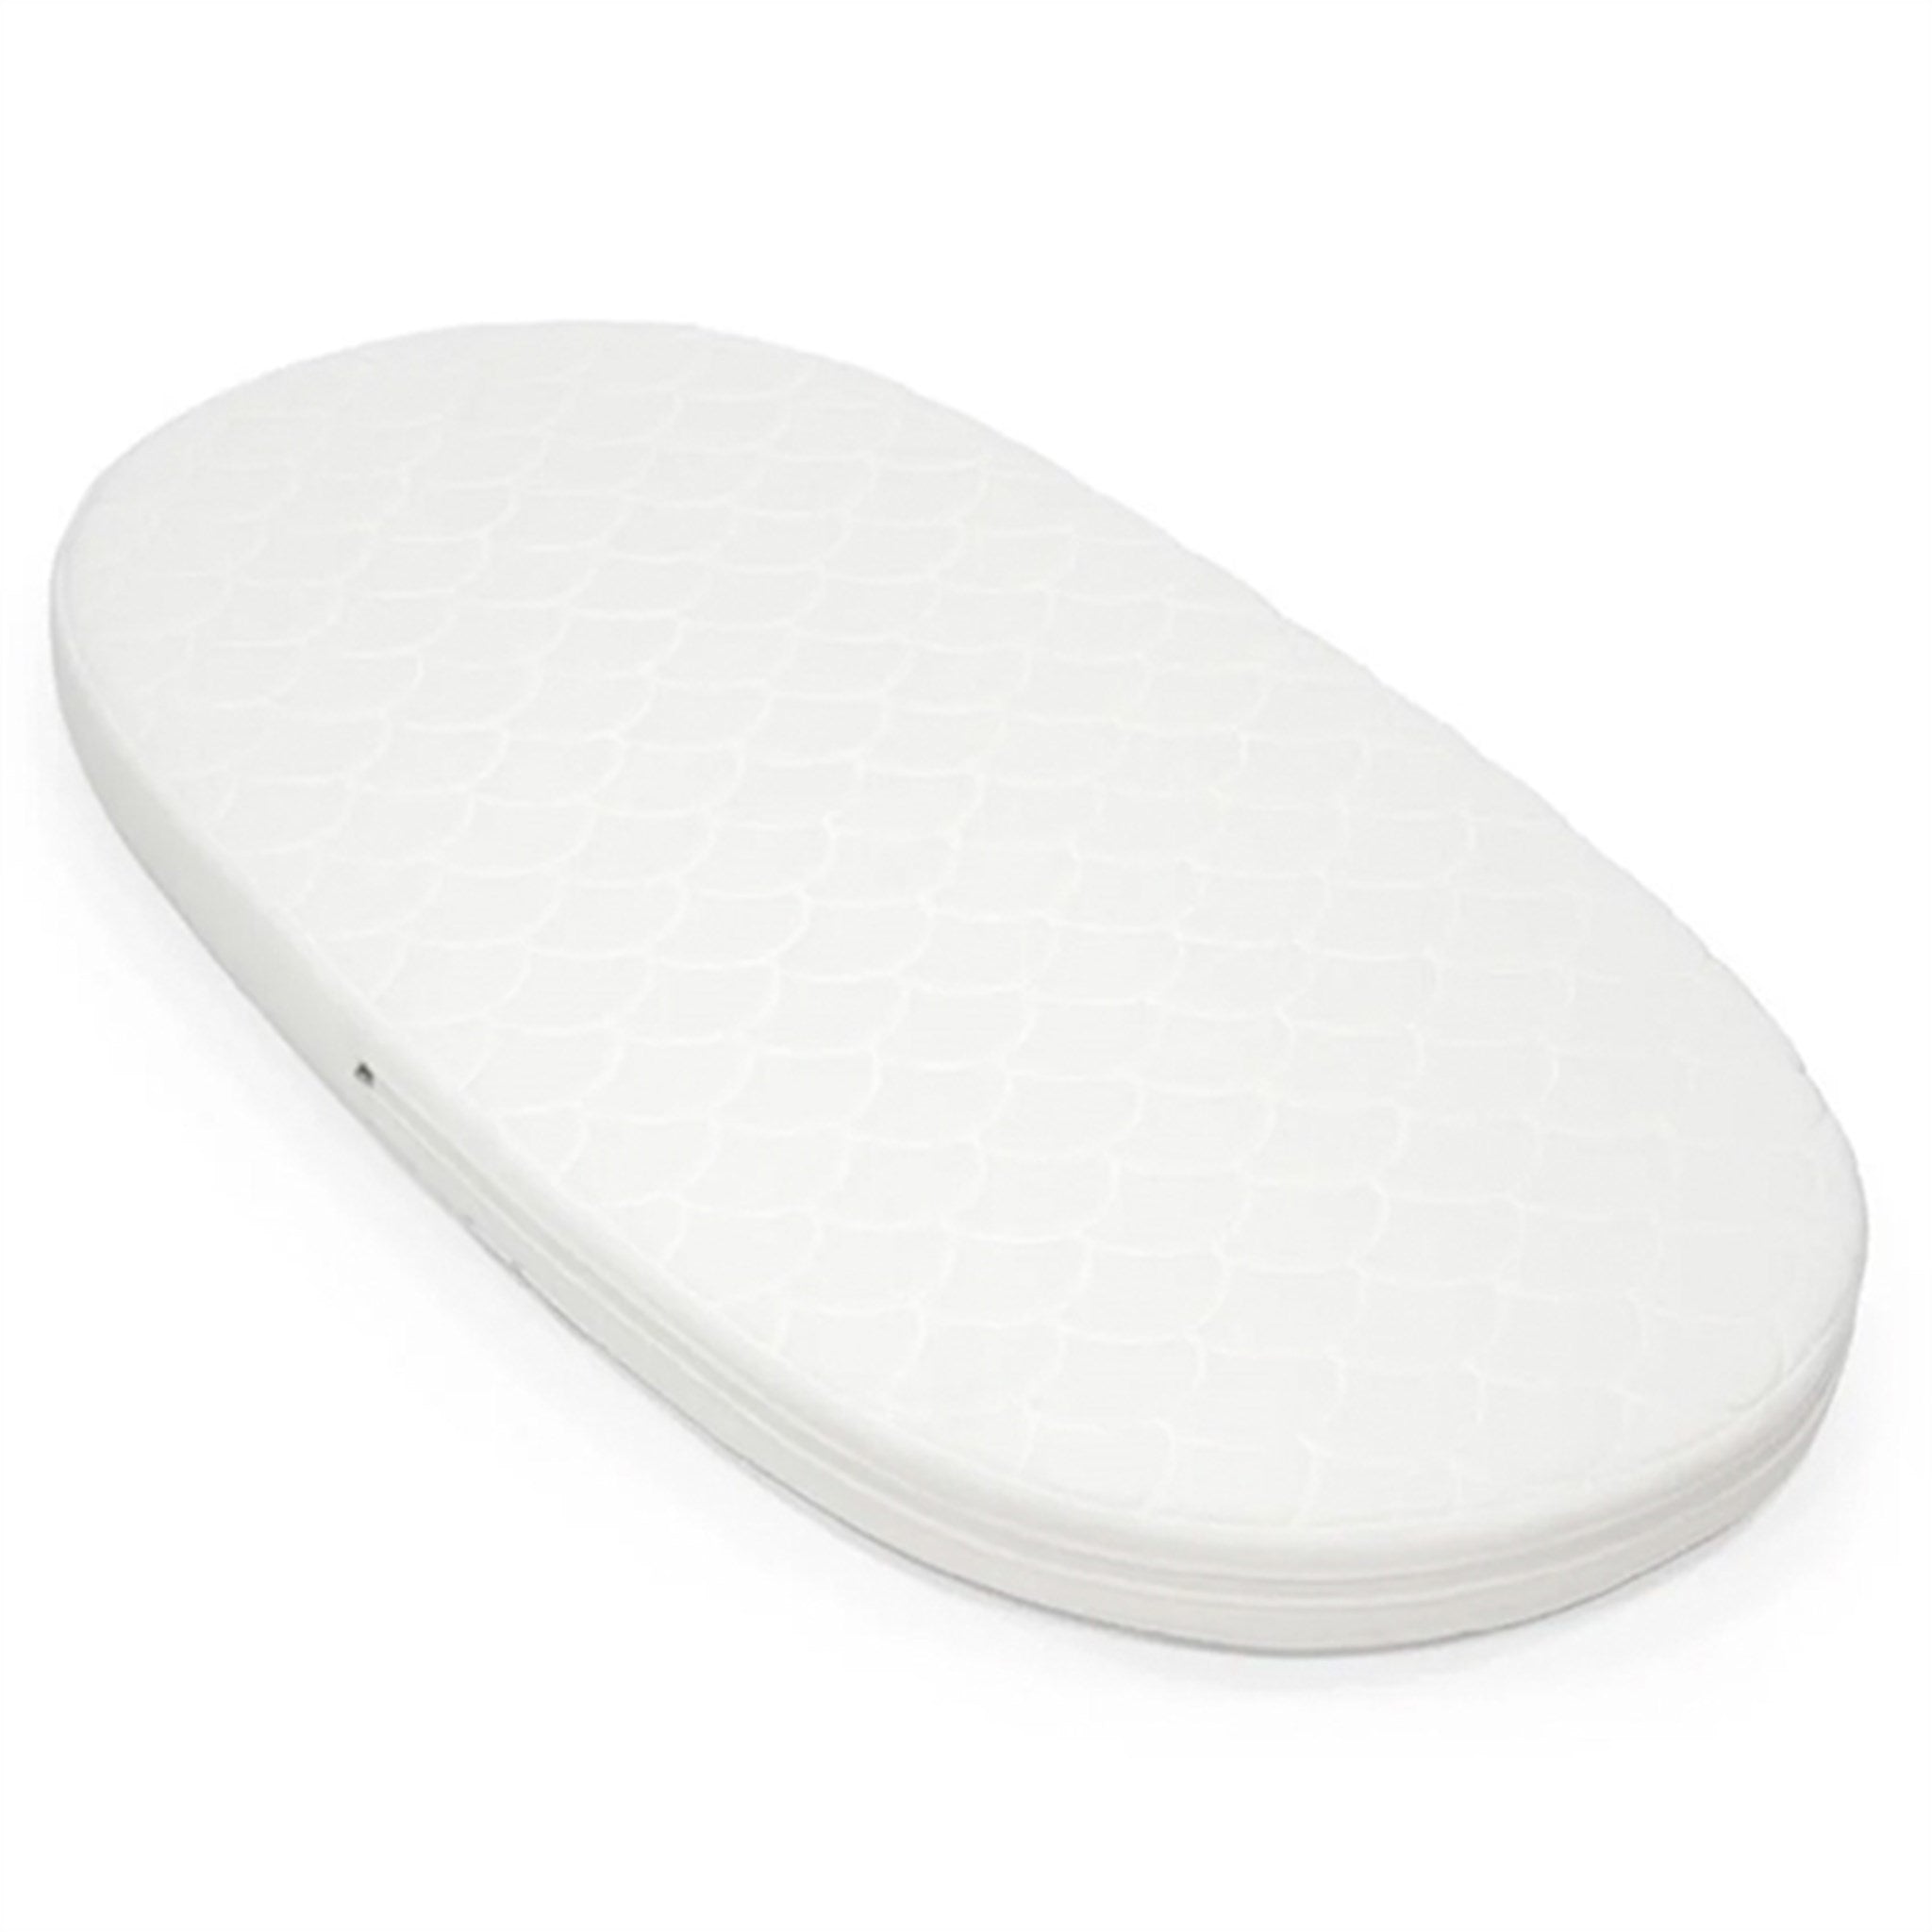 Stokke® Sleepi™ Bed Mattress V3